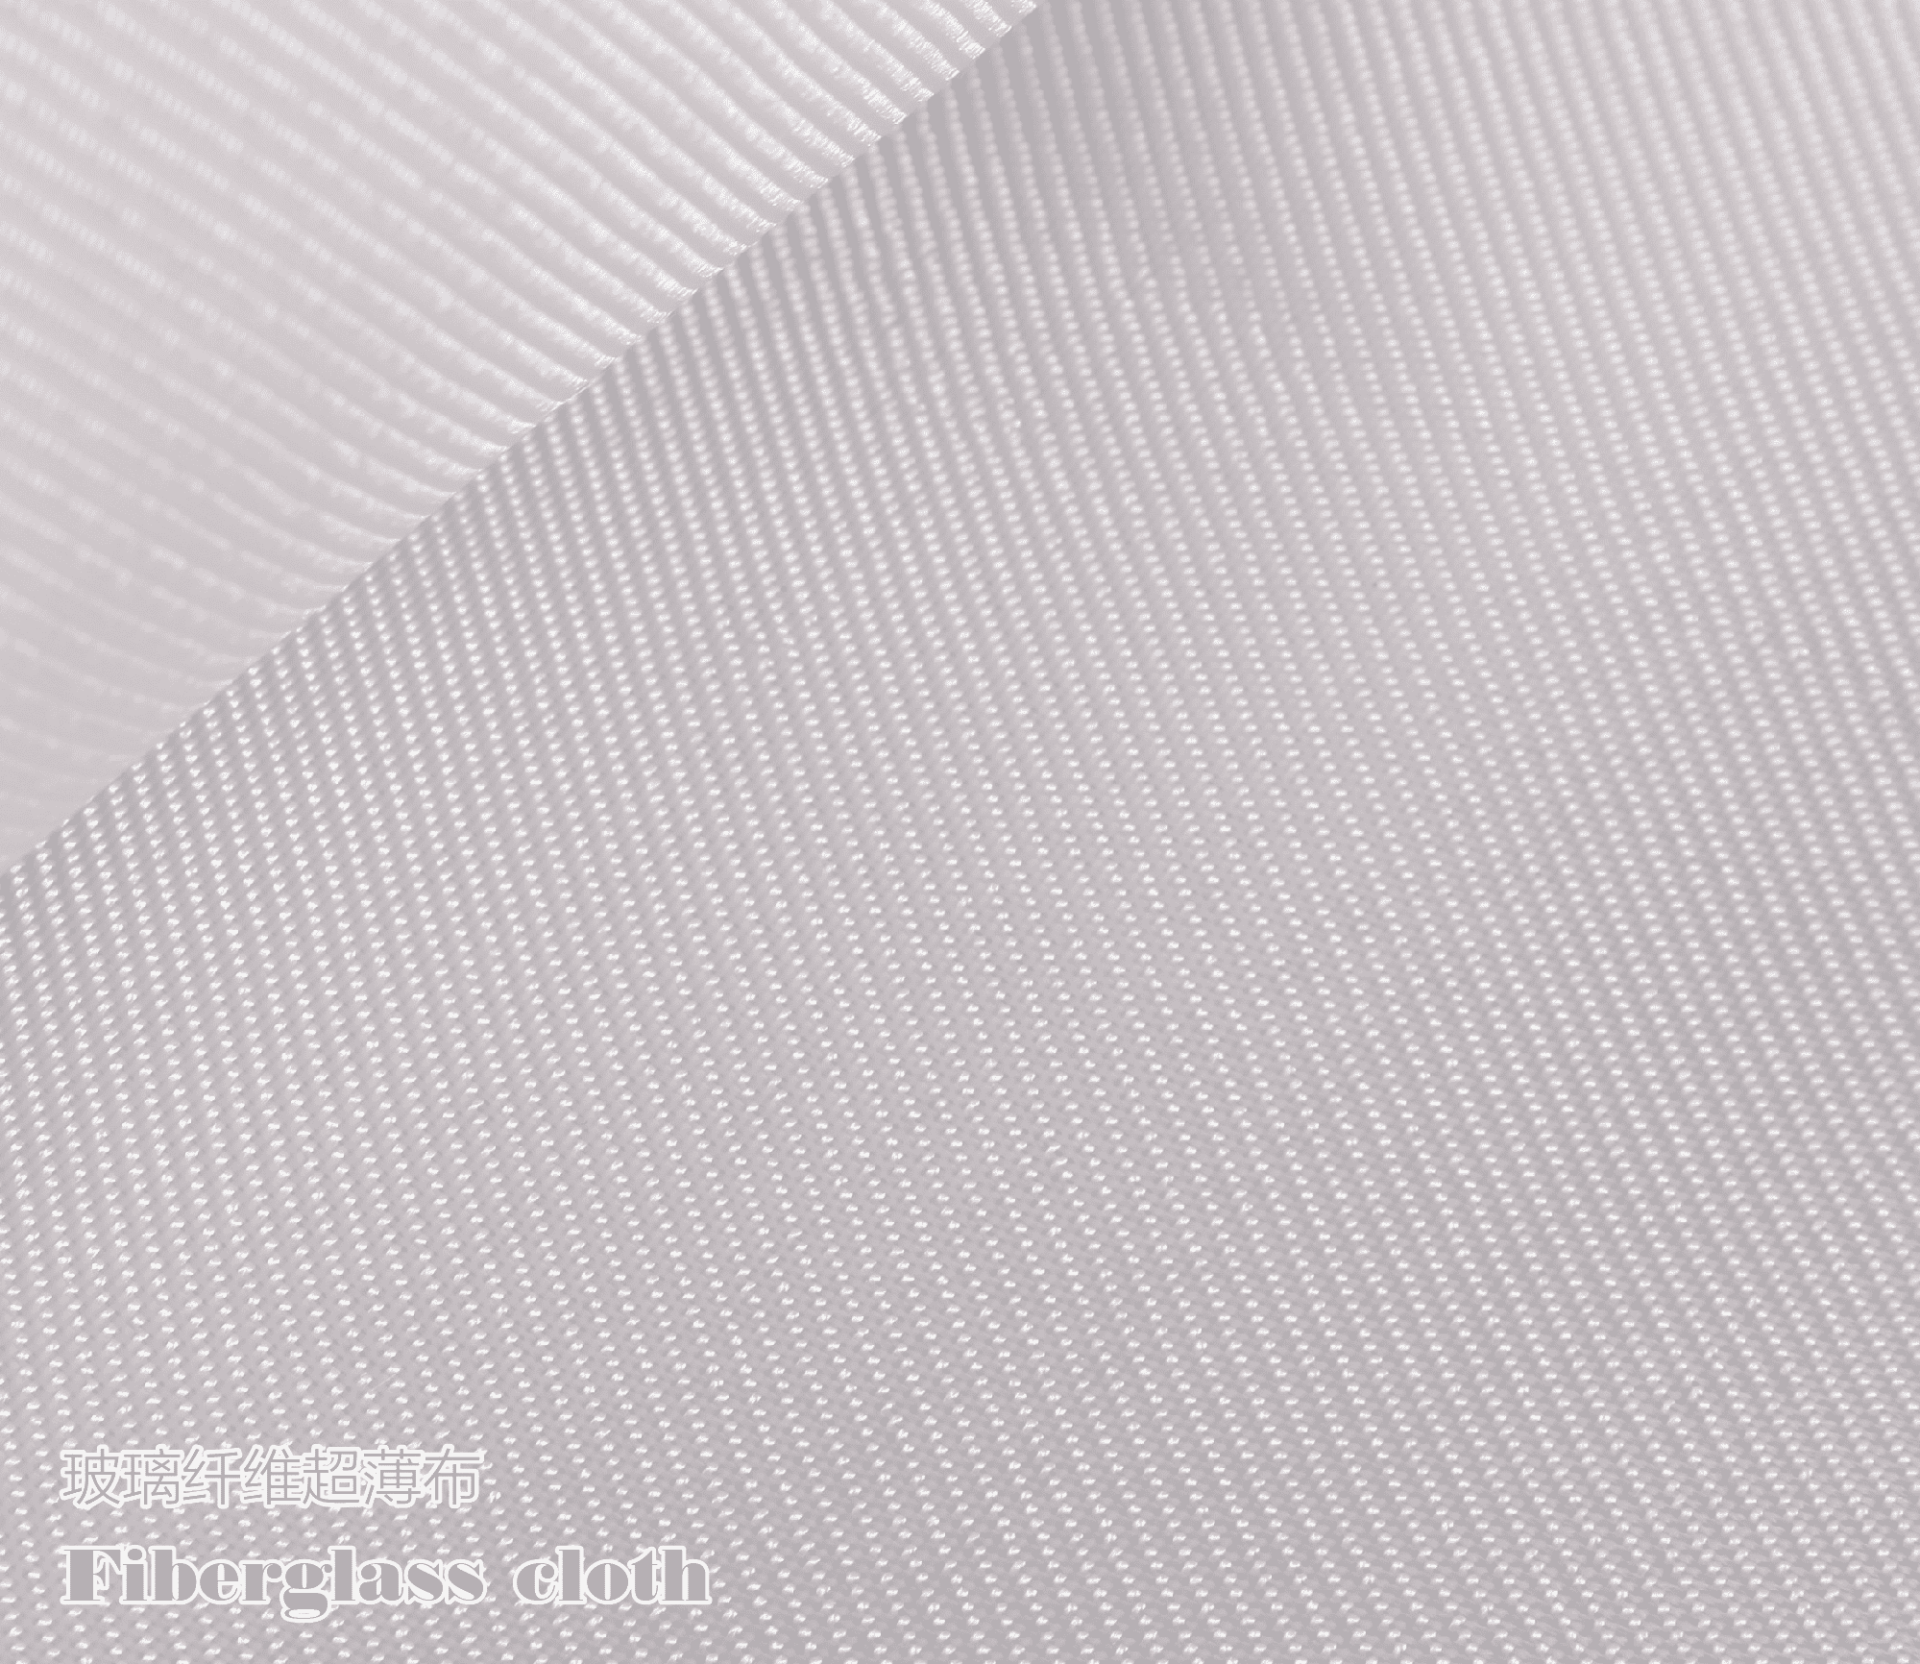 Ultra-thin fiberglass cloth